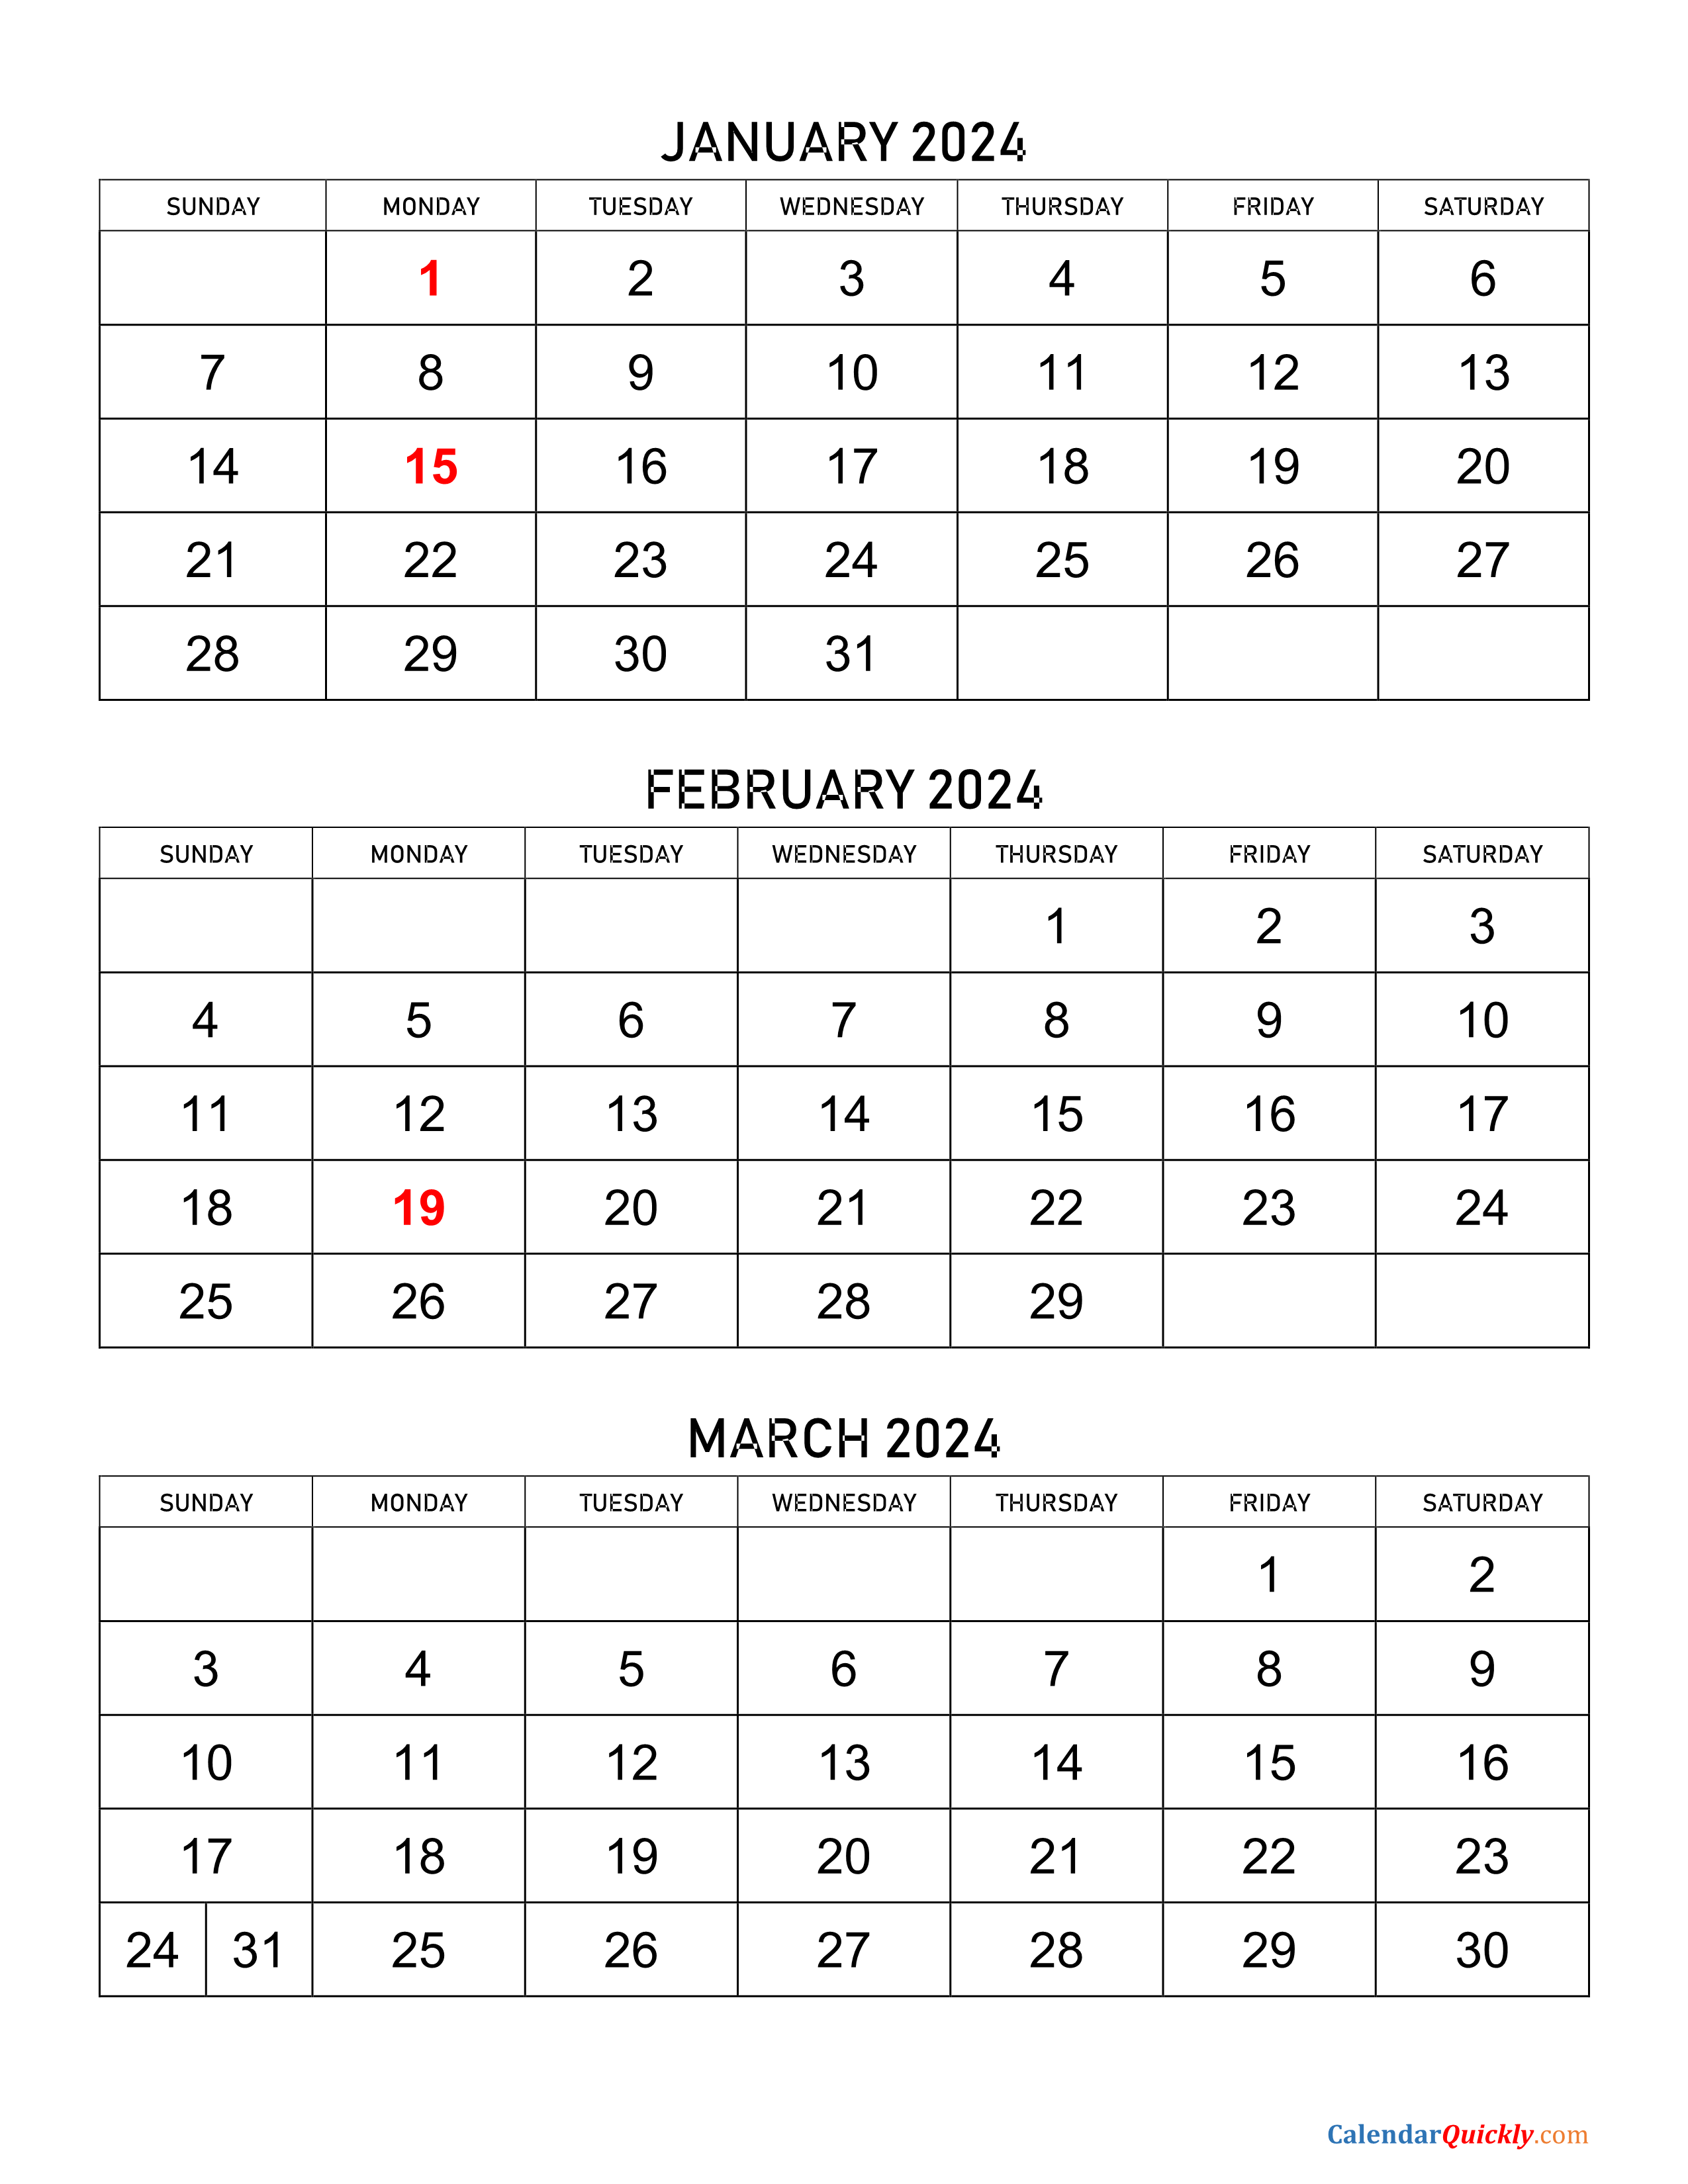 January to March 2024 Calendar Calendar Quickly